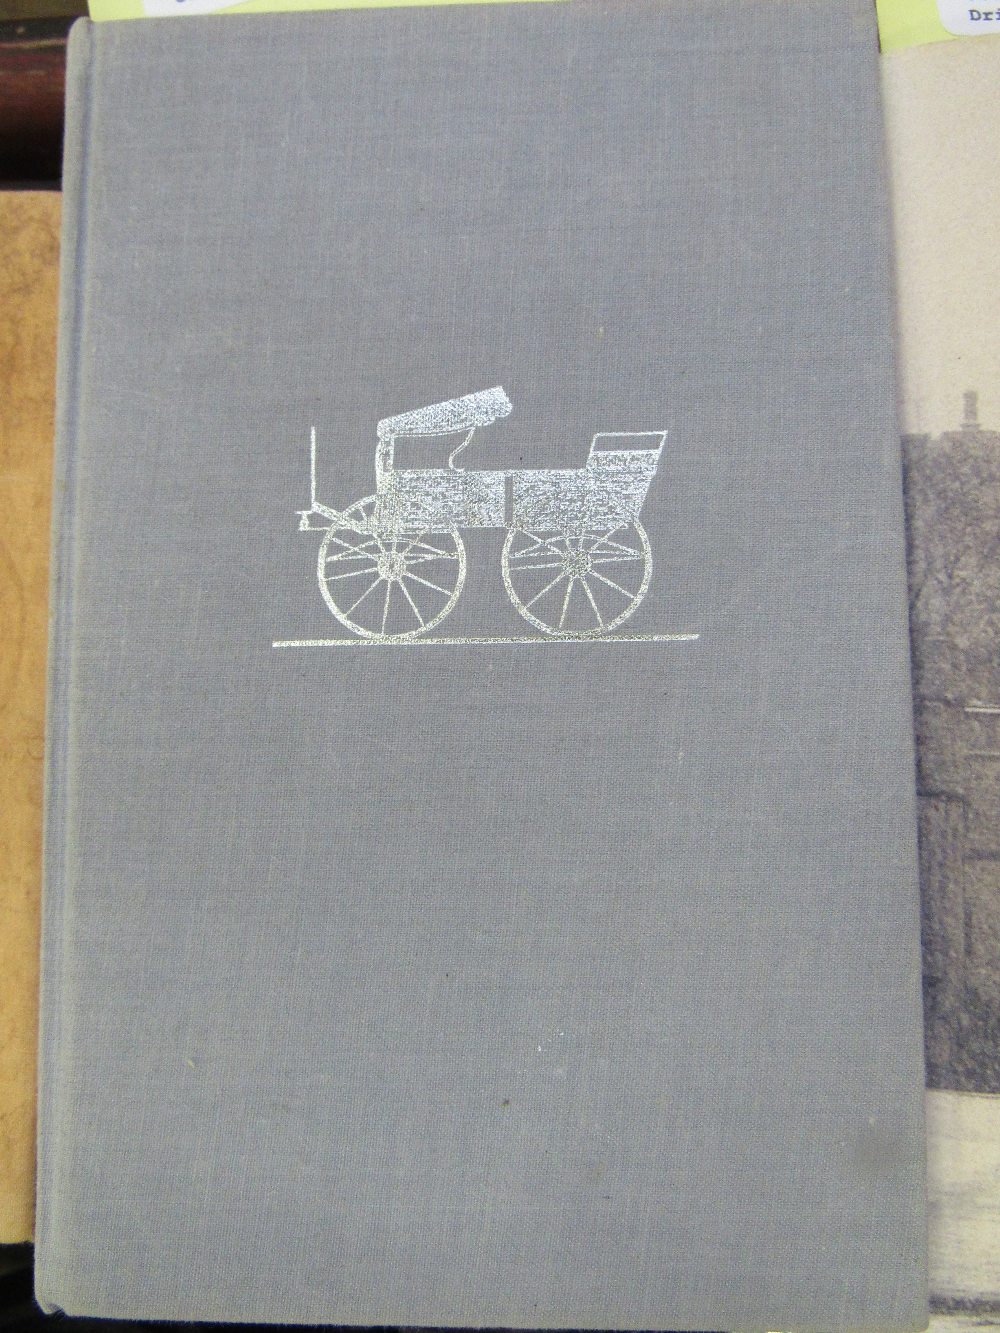 Adams, William Bridges: English Pleasure Carriages; 1971 reprint of the important 1837 work. The